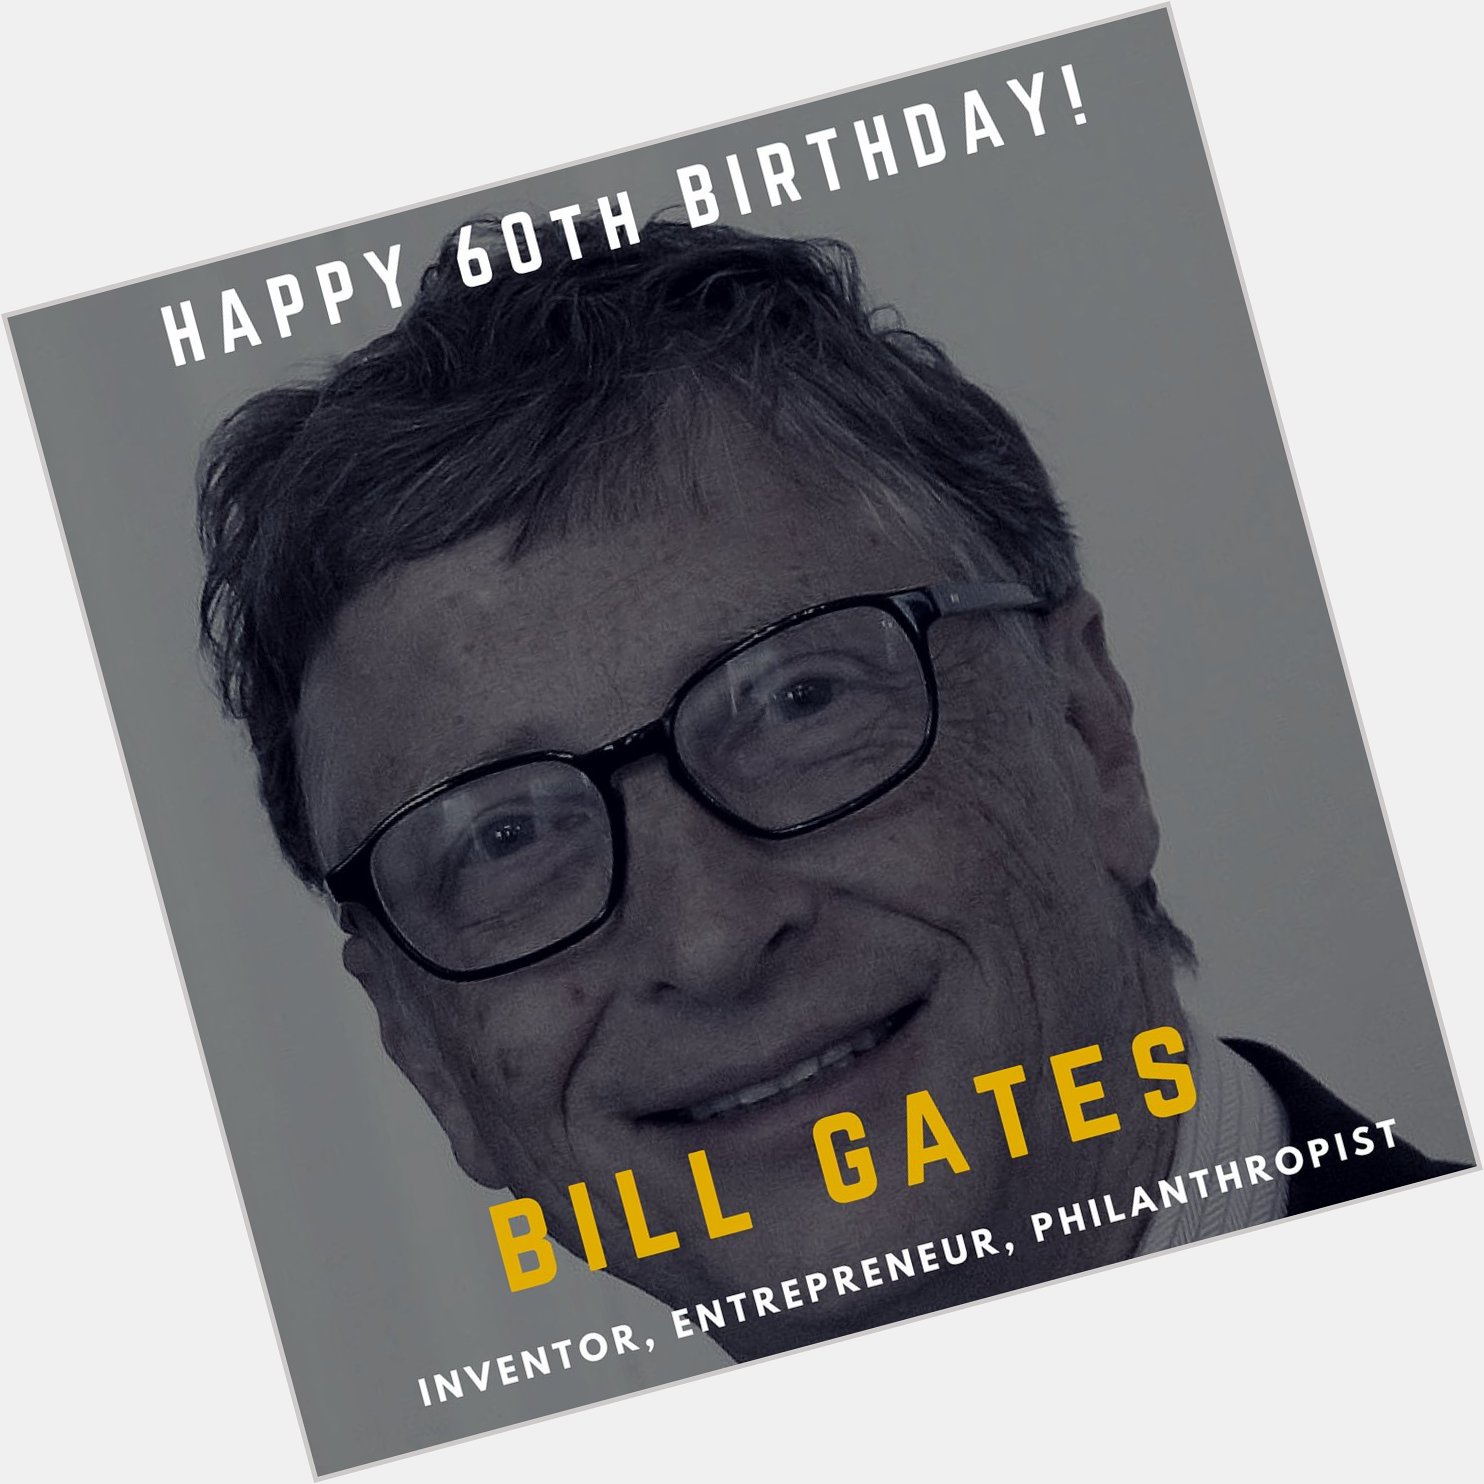 Happy 60th birthday to Microsoft co-founder Bill Gates! 